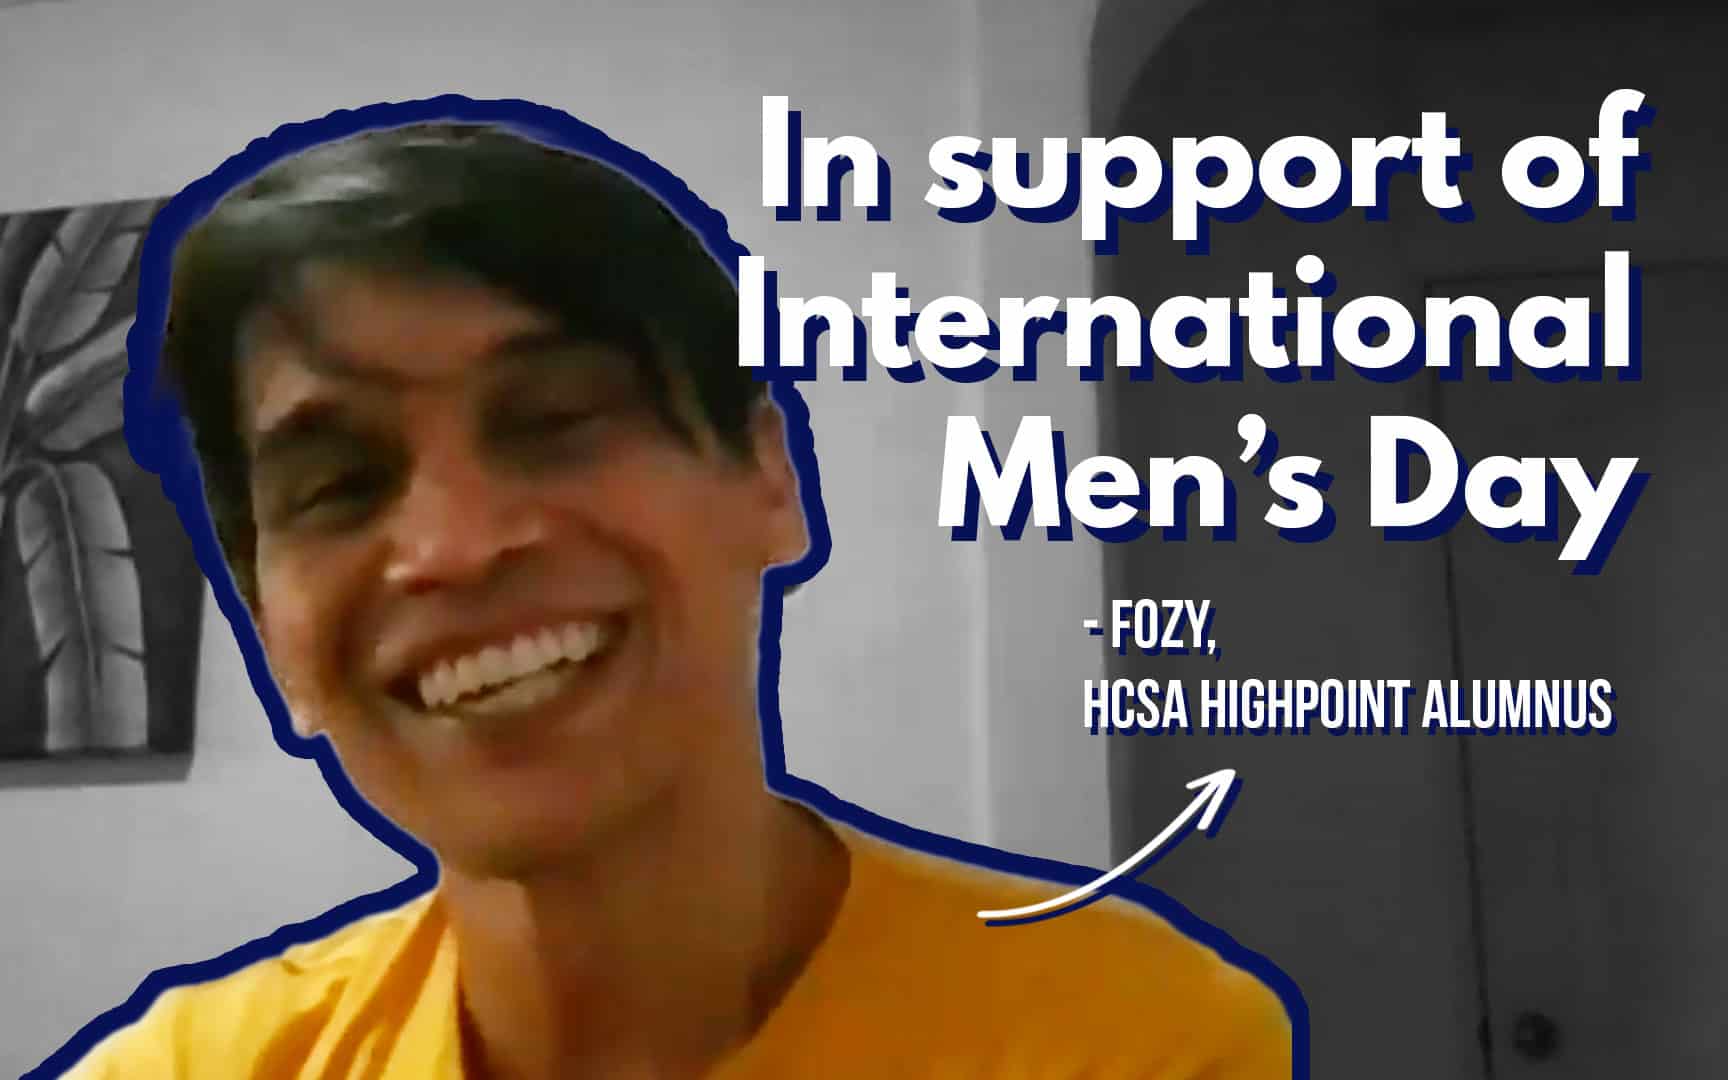 International Men's Day Fozy_featured